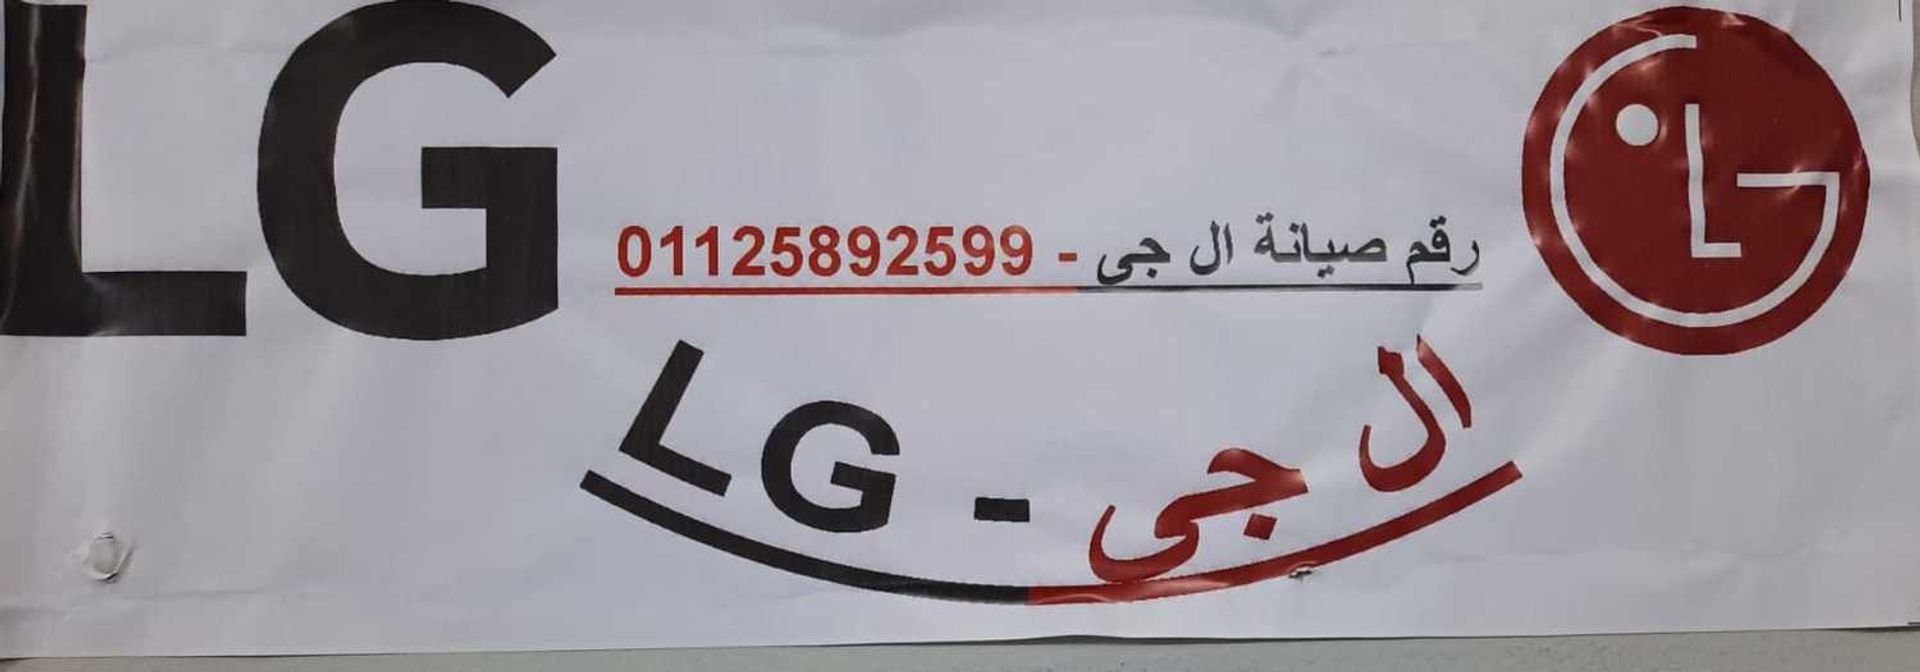 اقرب صيانة غسالات LG سنورس 01154008110